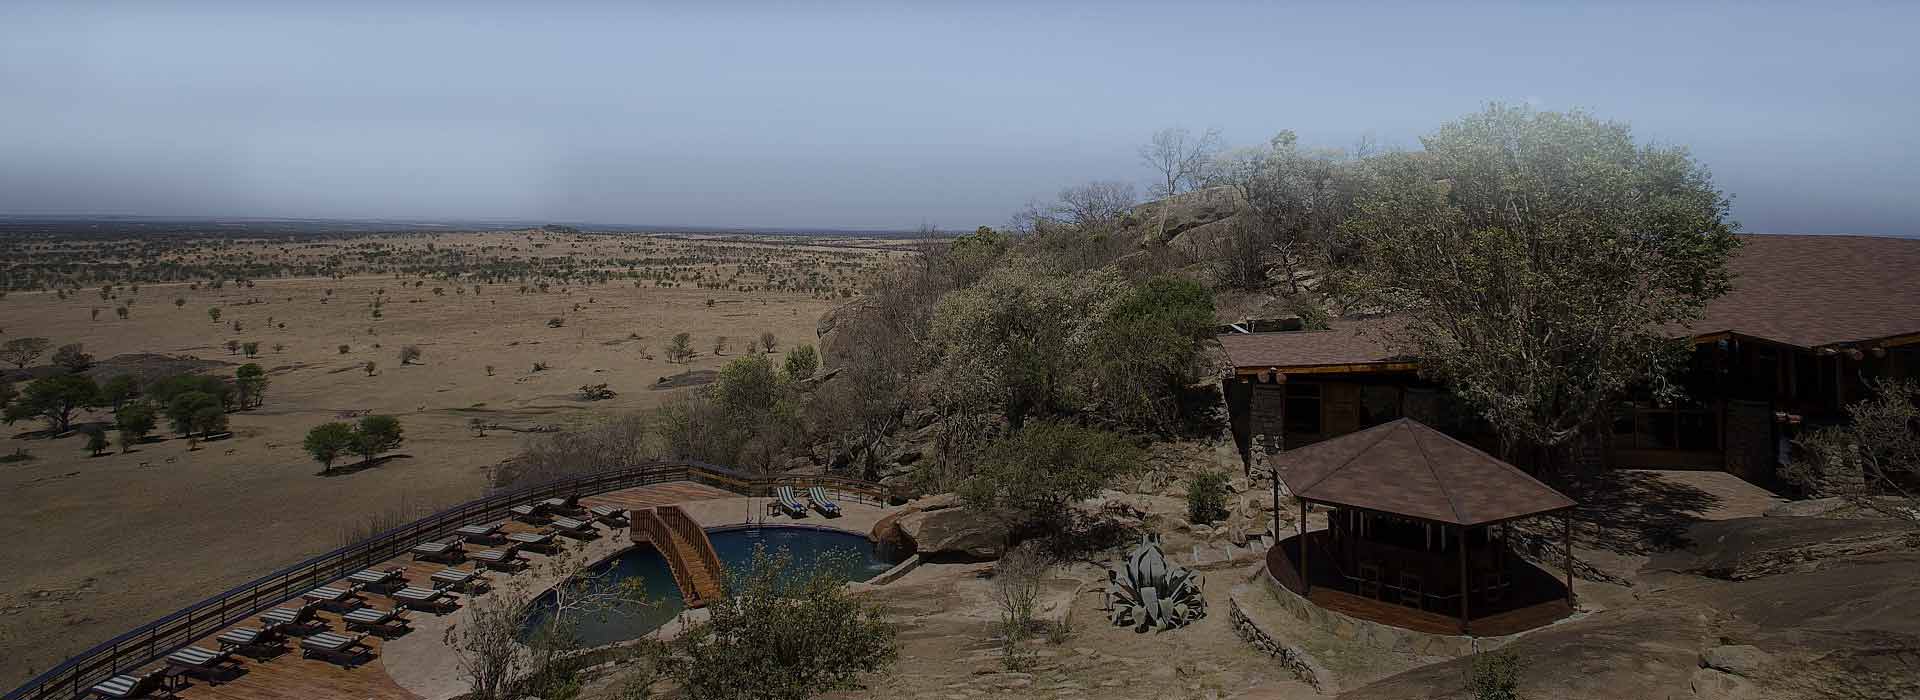 Tanzania Lodge Safari from Mwanza 